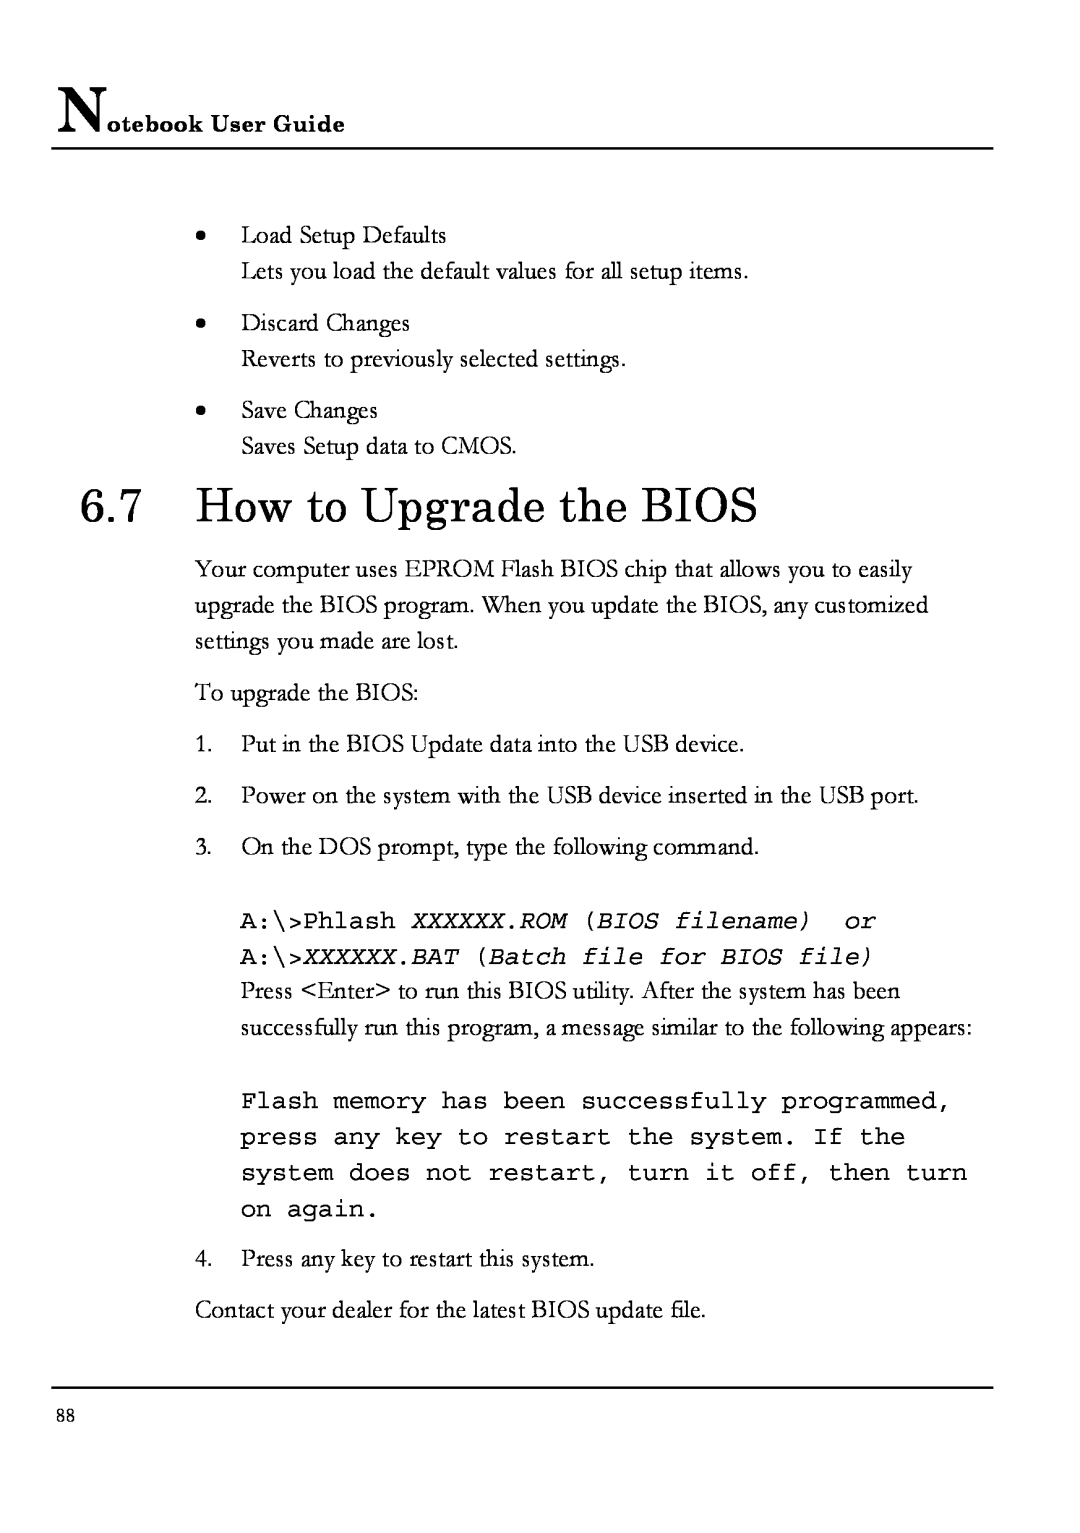 Everex NM4100W manual How to Upgrade the BIOS, A\Phlash XXXXXX.ROM BIOS filename or, A\XXXXXX.BAT Batch file for BIOS file 